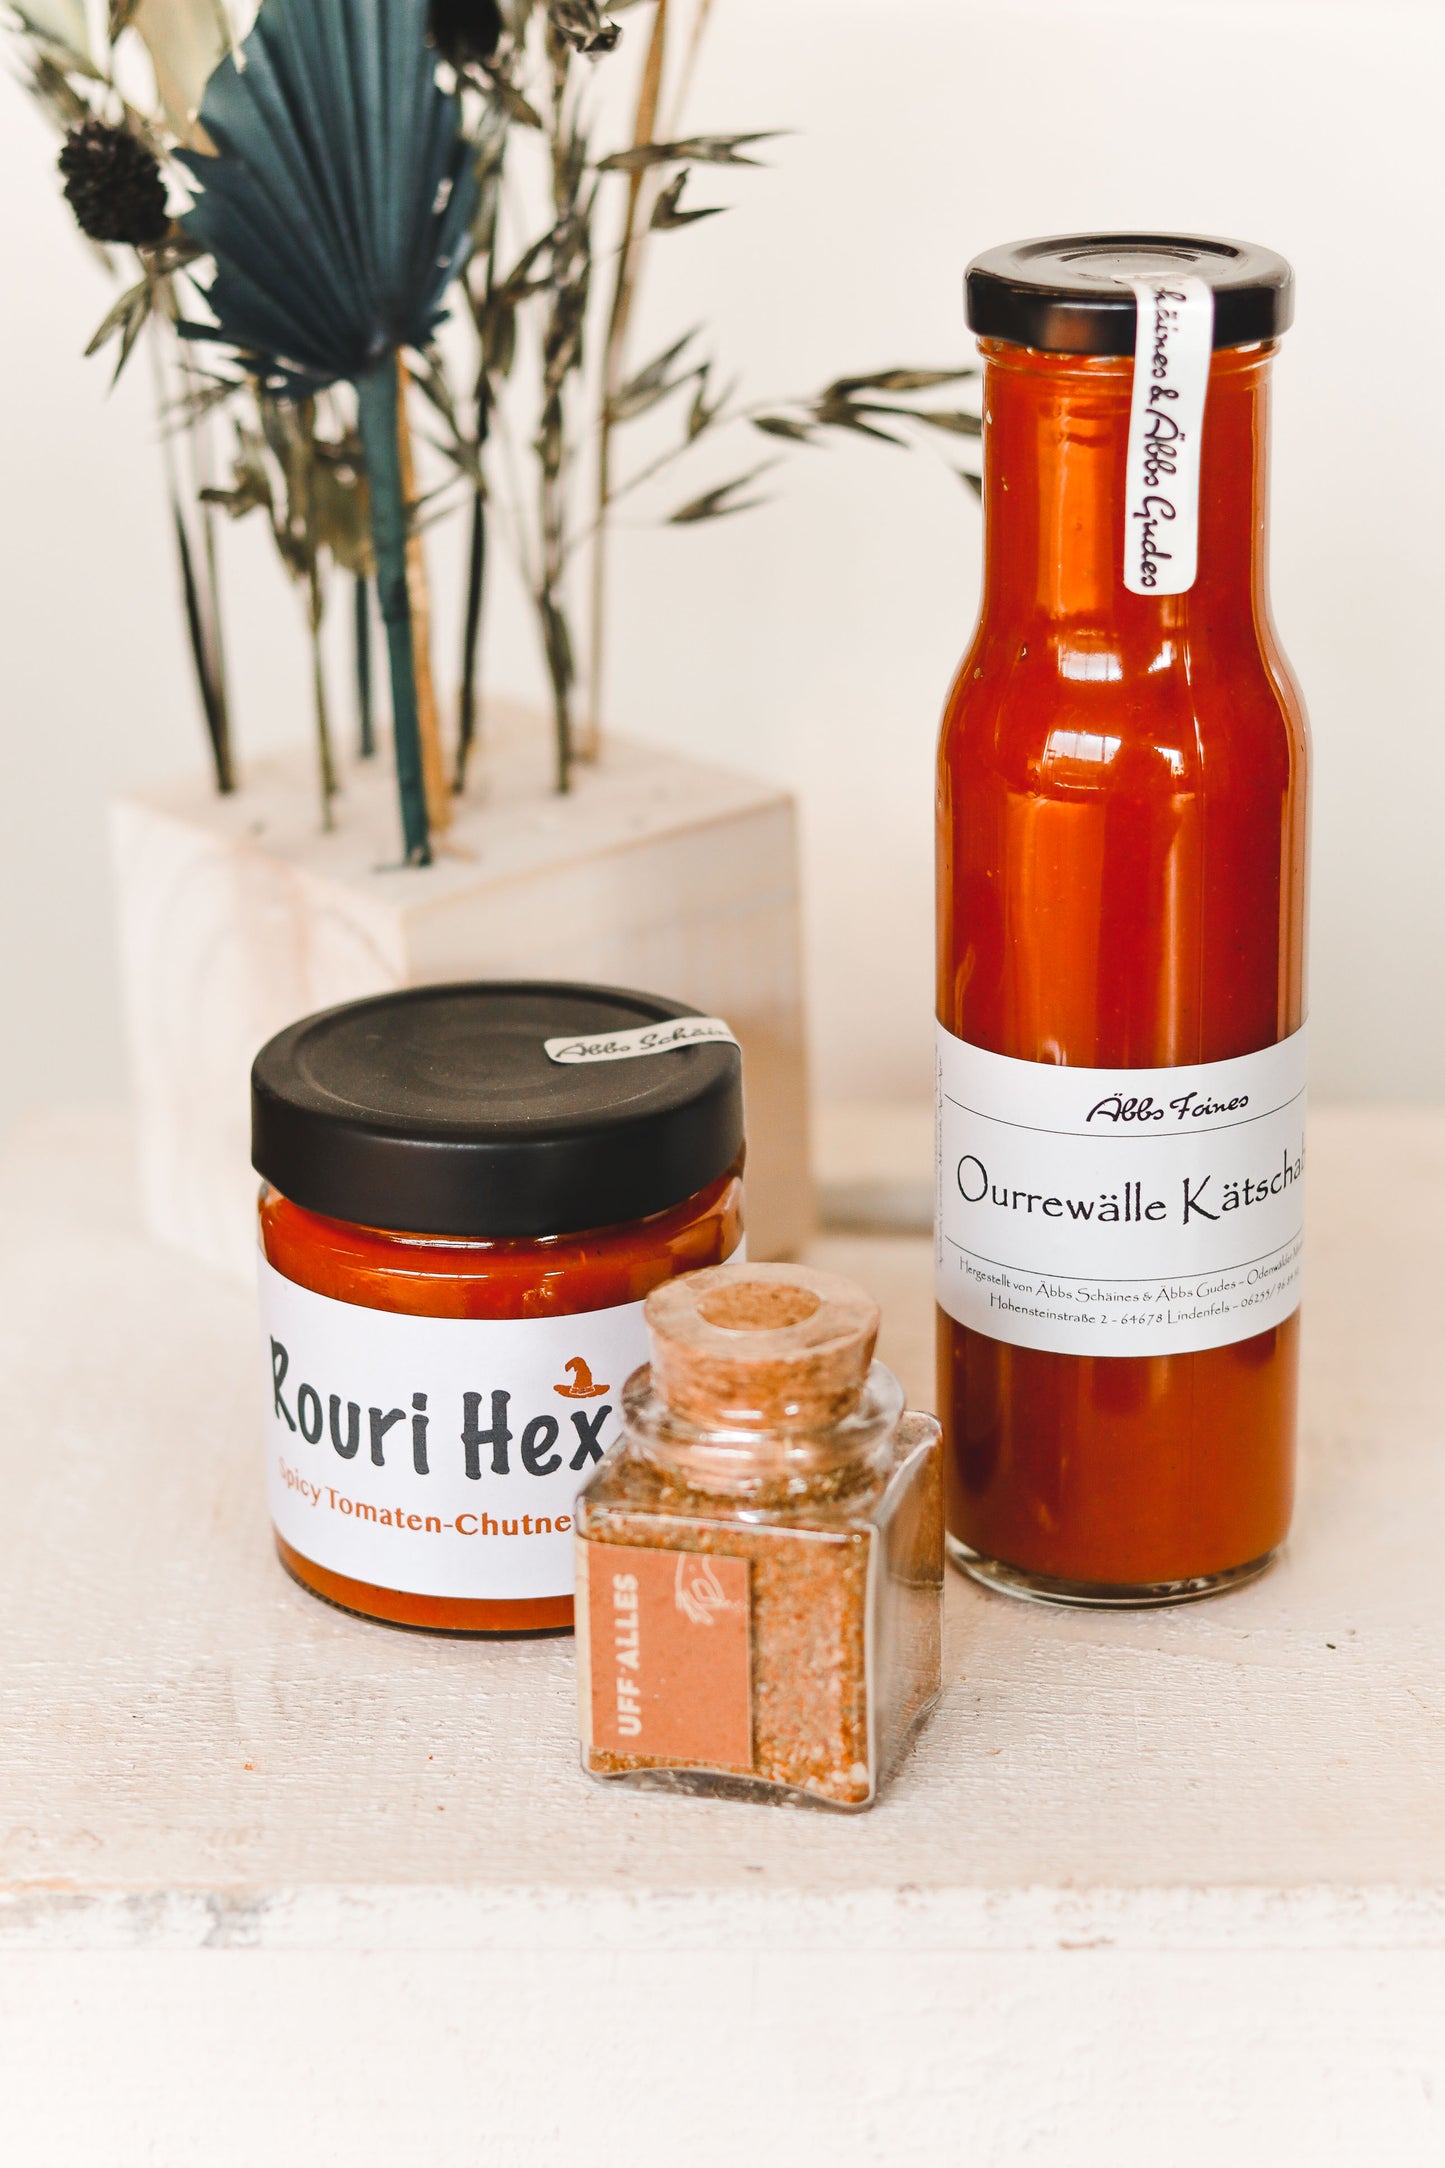 Rouri Hex – Spicy Tomaten-Chutney